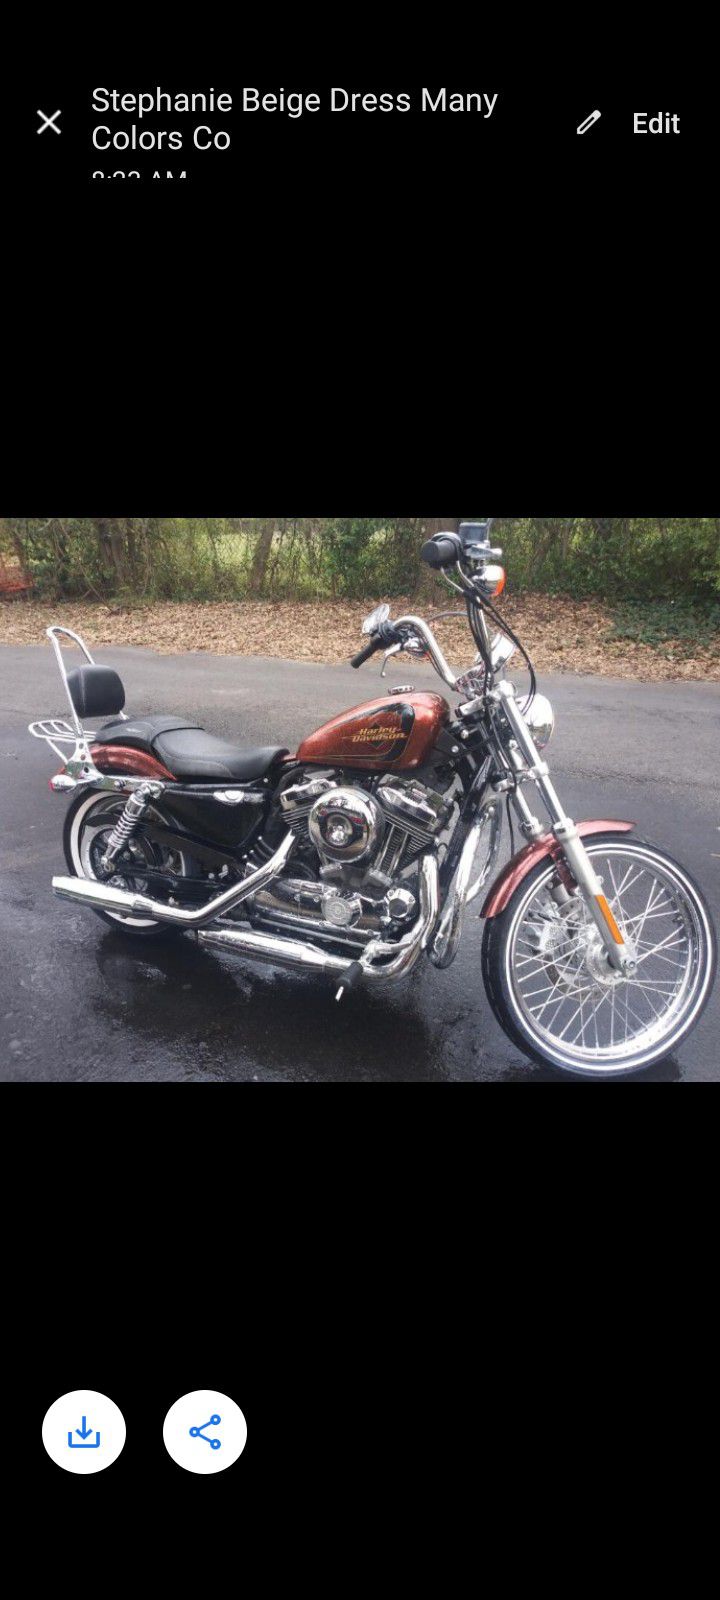 Motorcycle "Harley Davidson" 2014   XL1200V 31 Miles